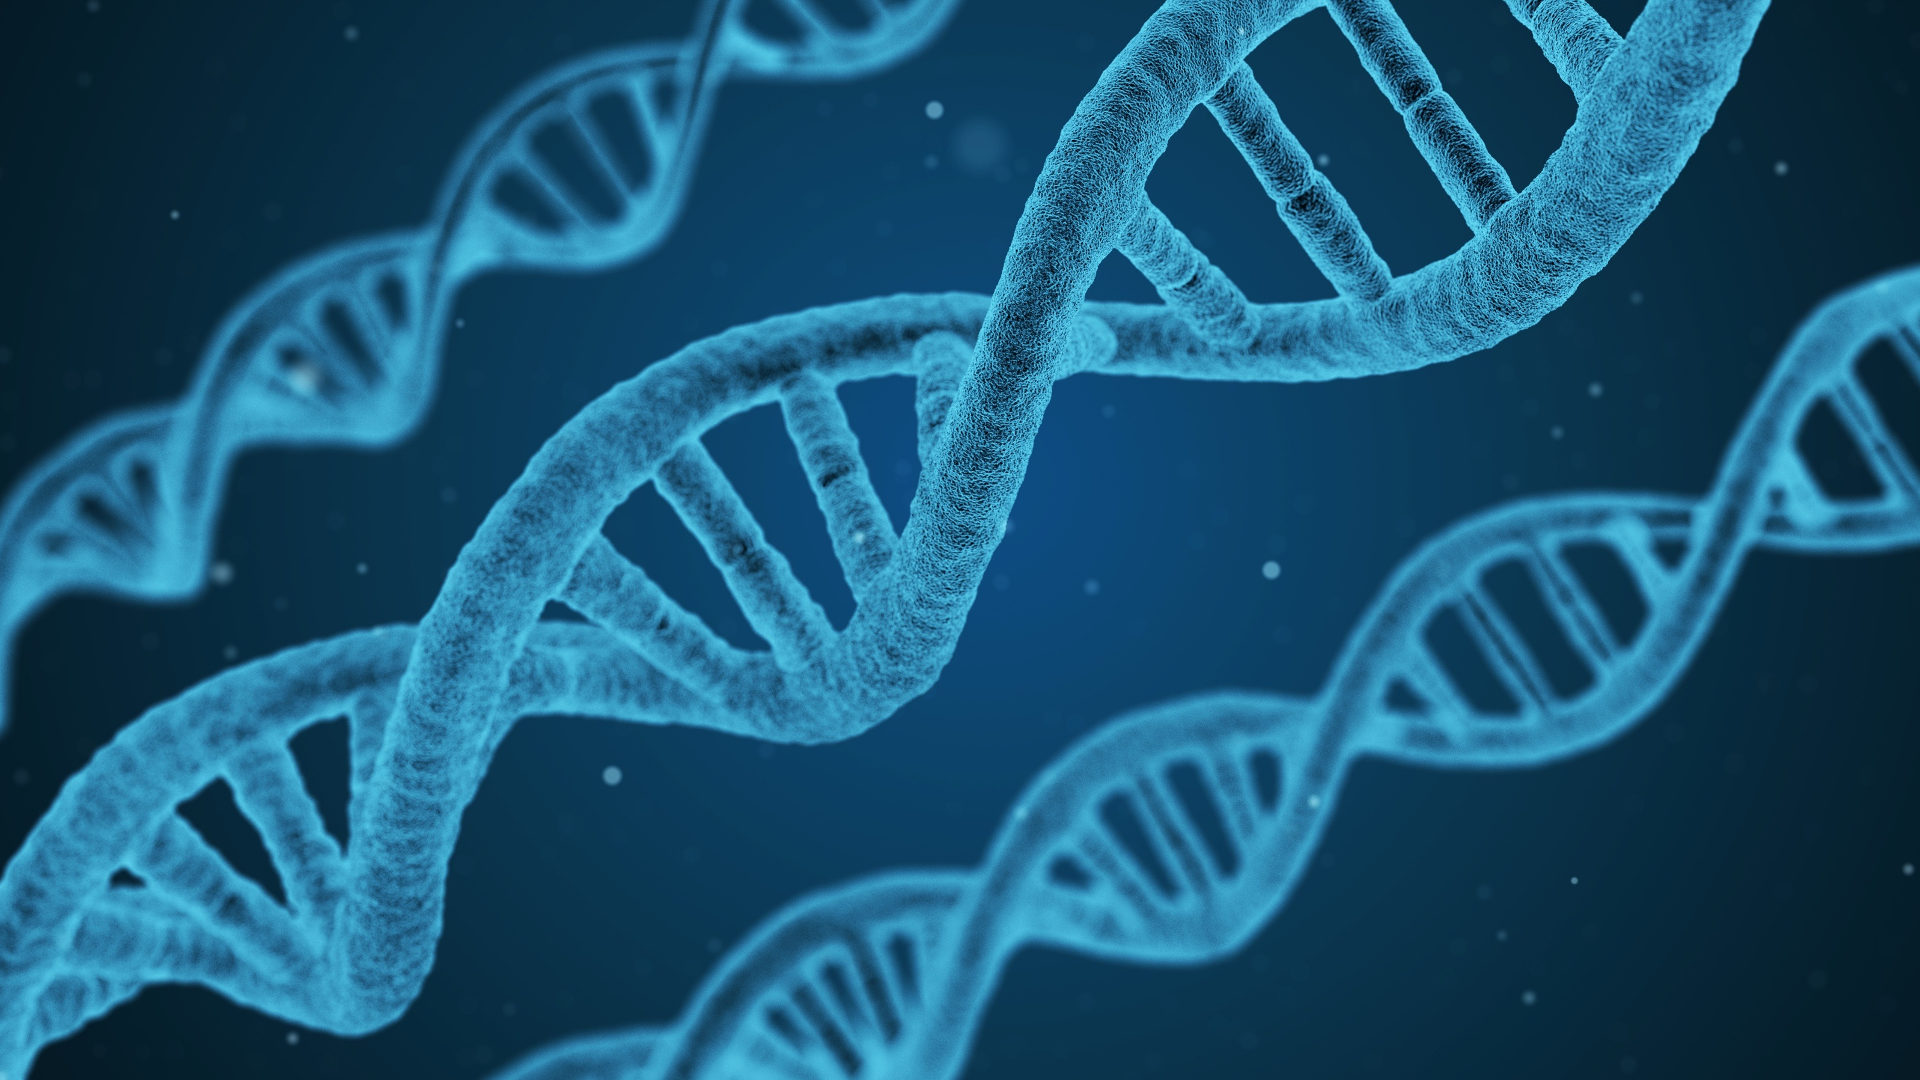 Kostbares Erbgut: DNA-Stränge